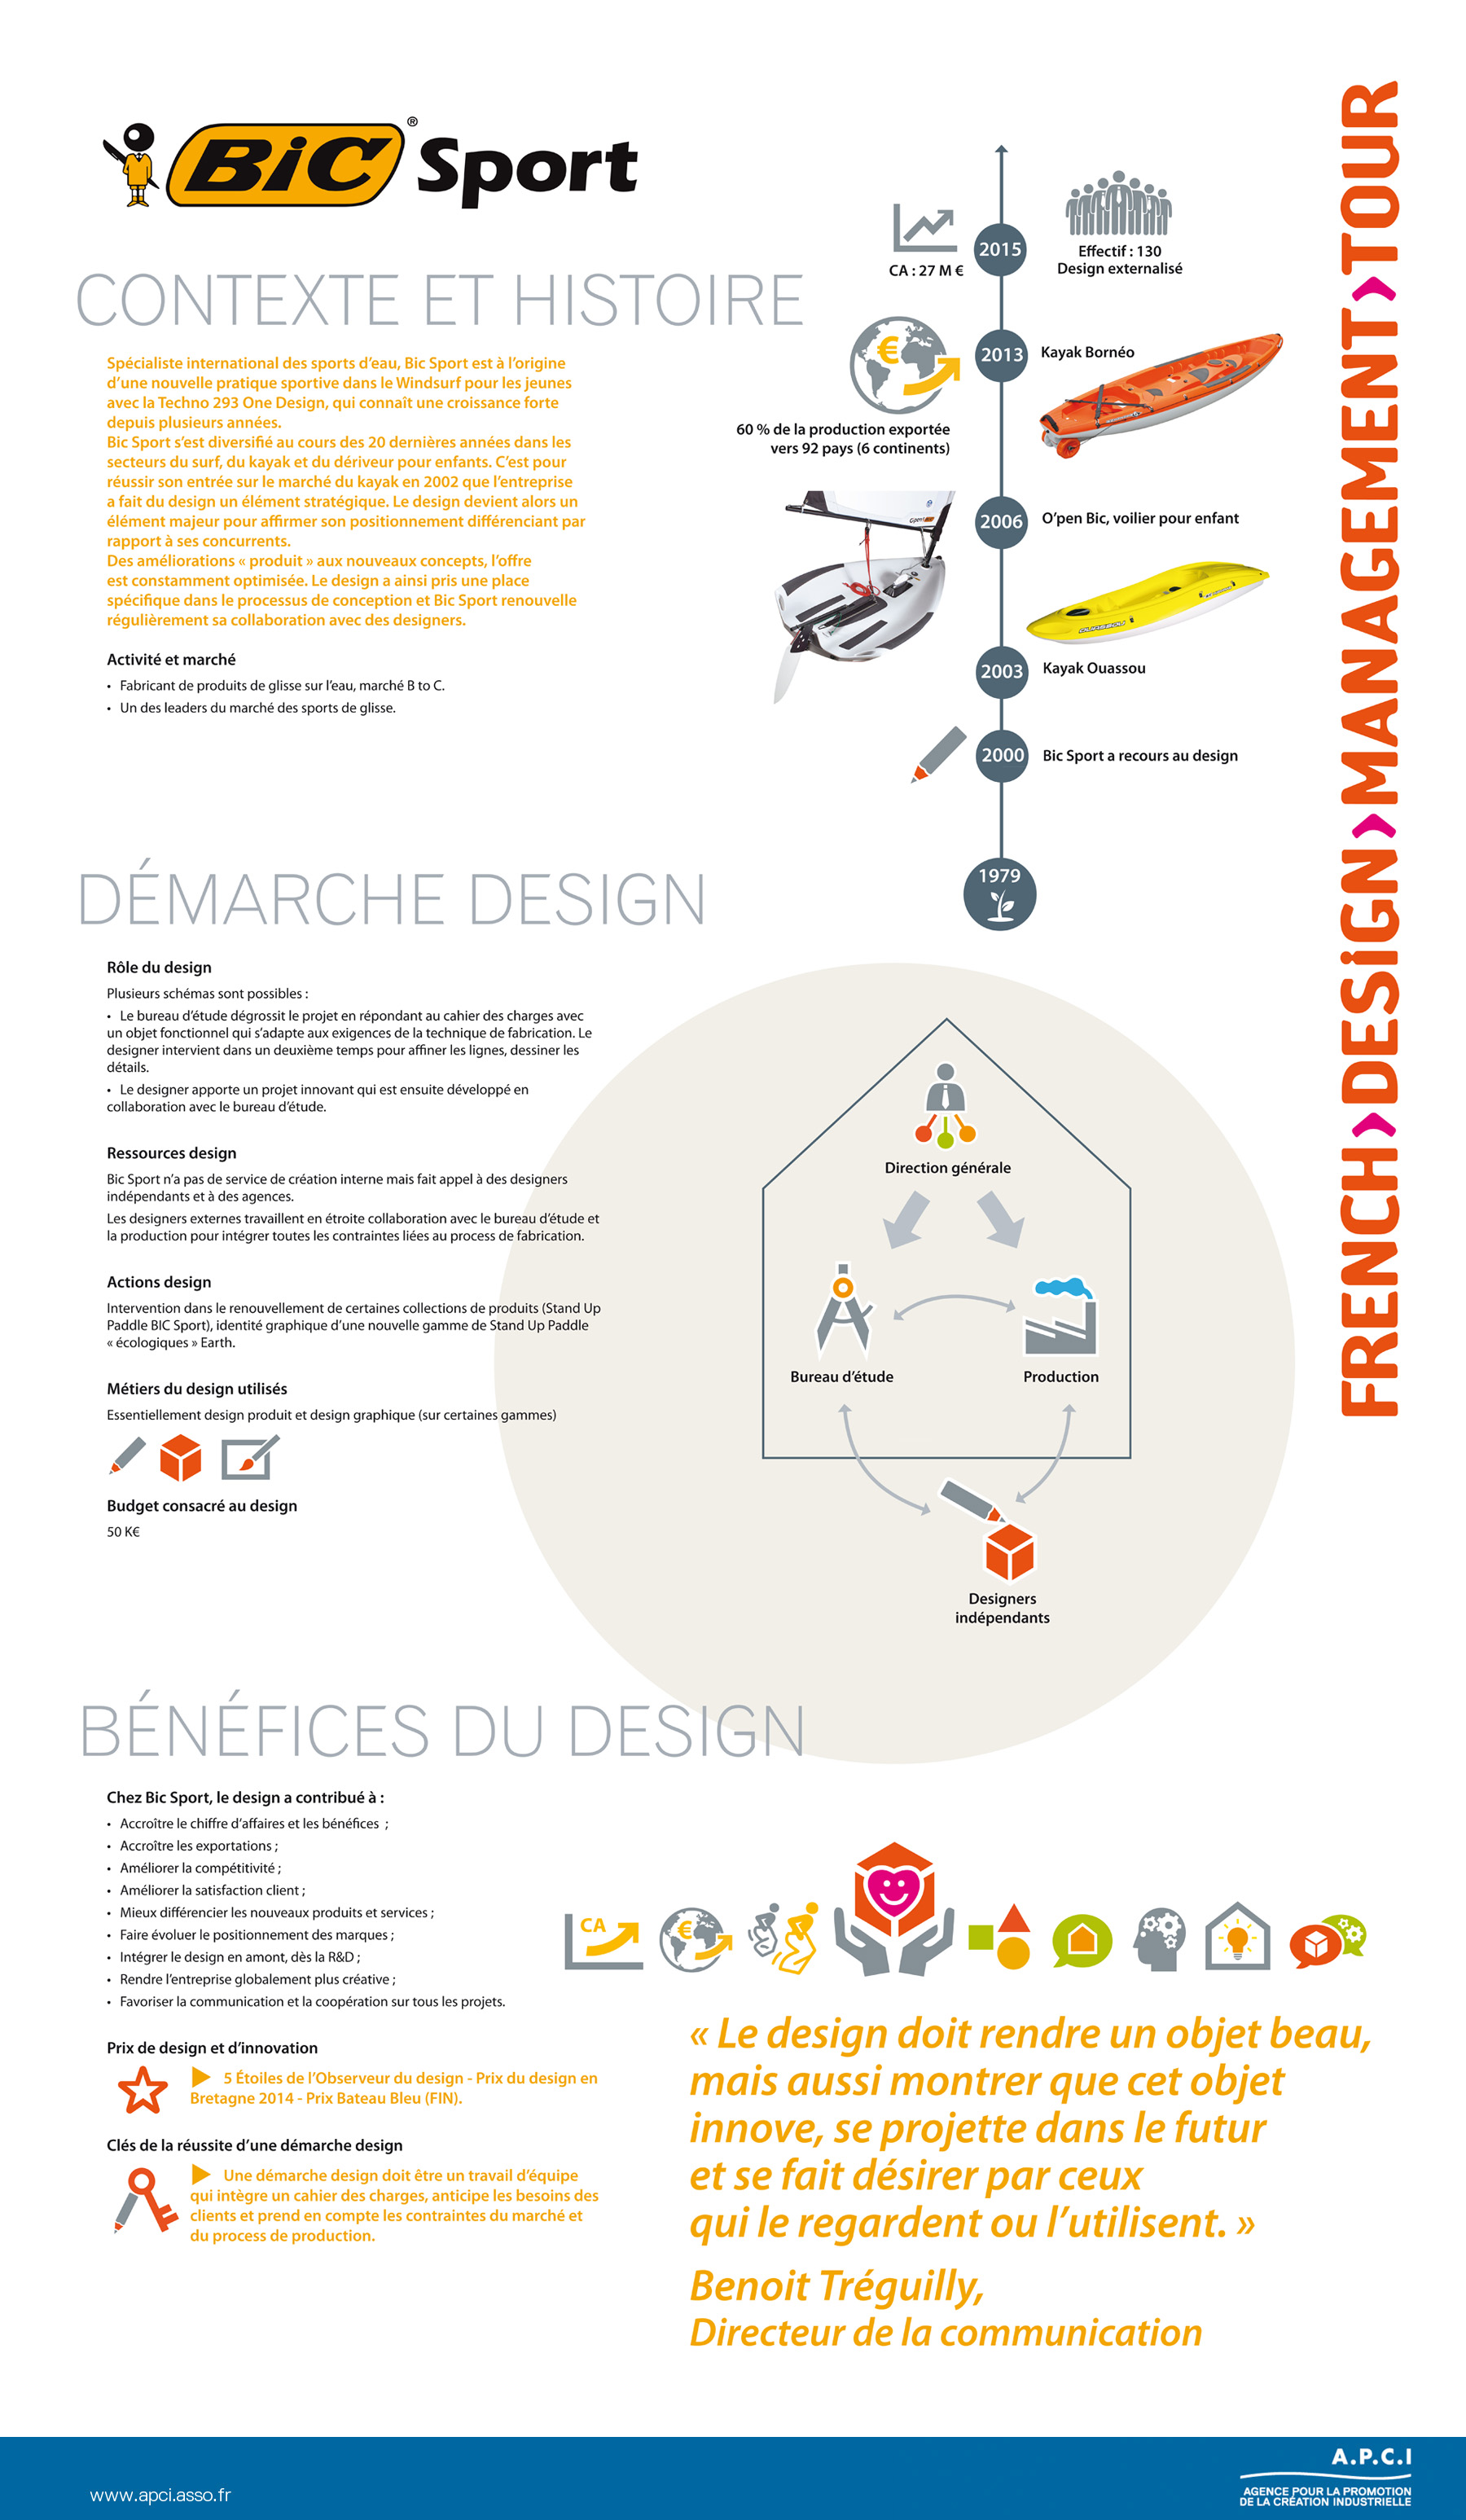 French Design Management Tour - Bic Sport